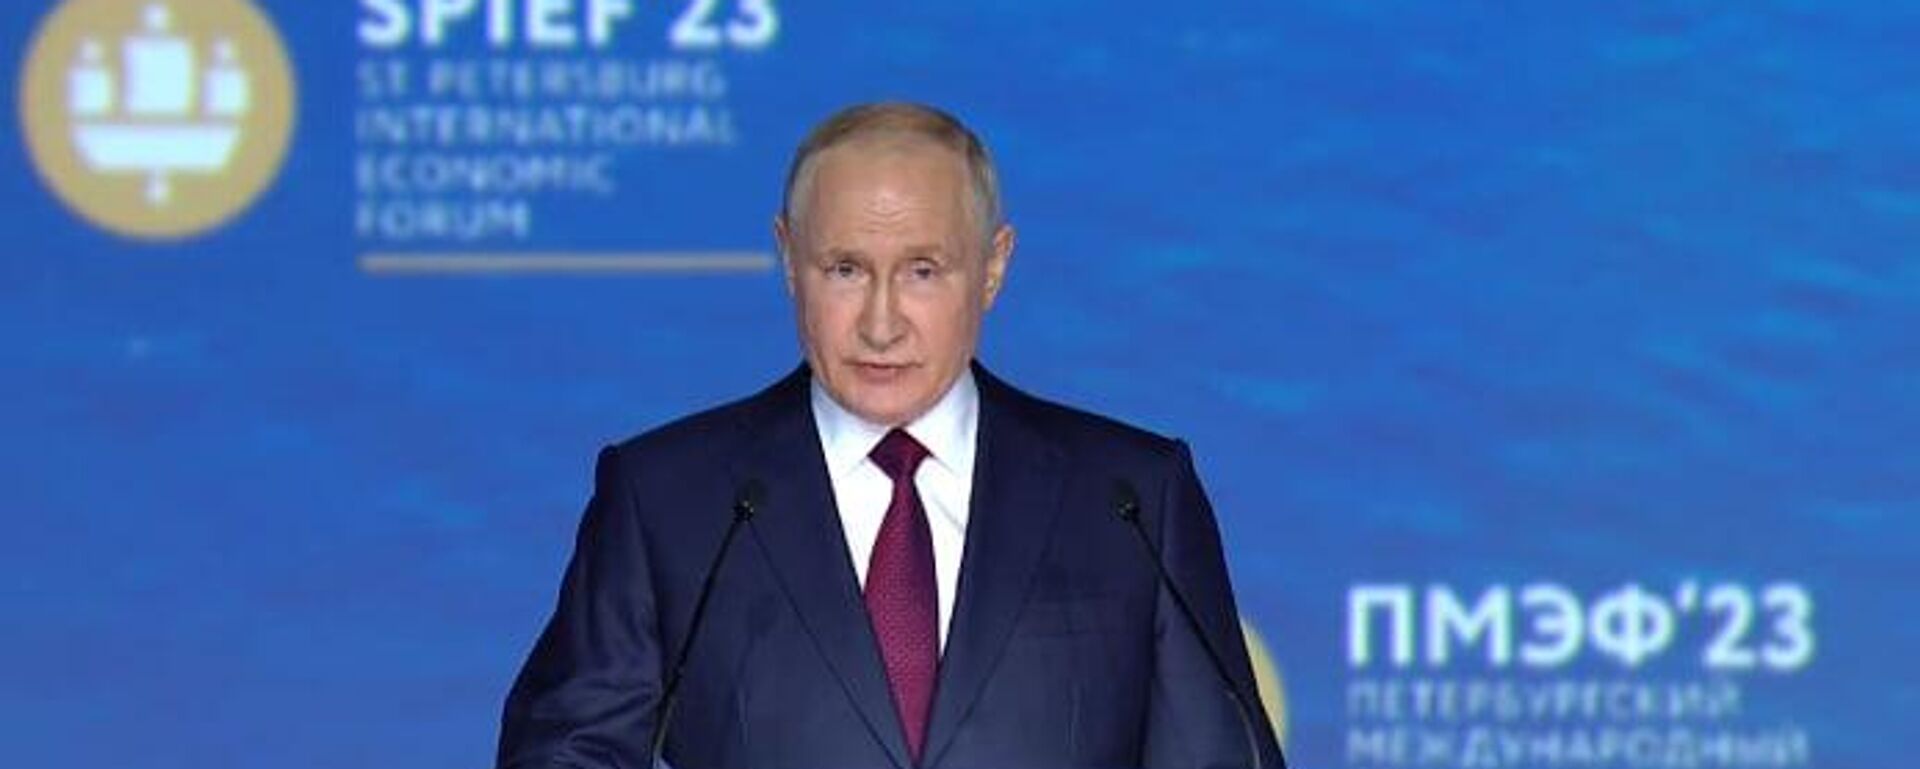 Vladimir Putin addresses SPIEF 2023 plenary session - Sputnik India, 1920, 16.06.2023